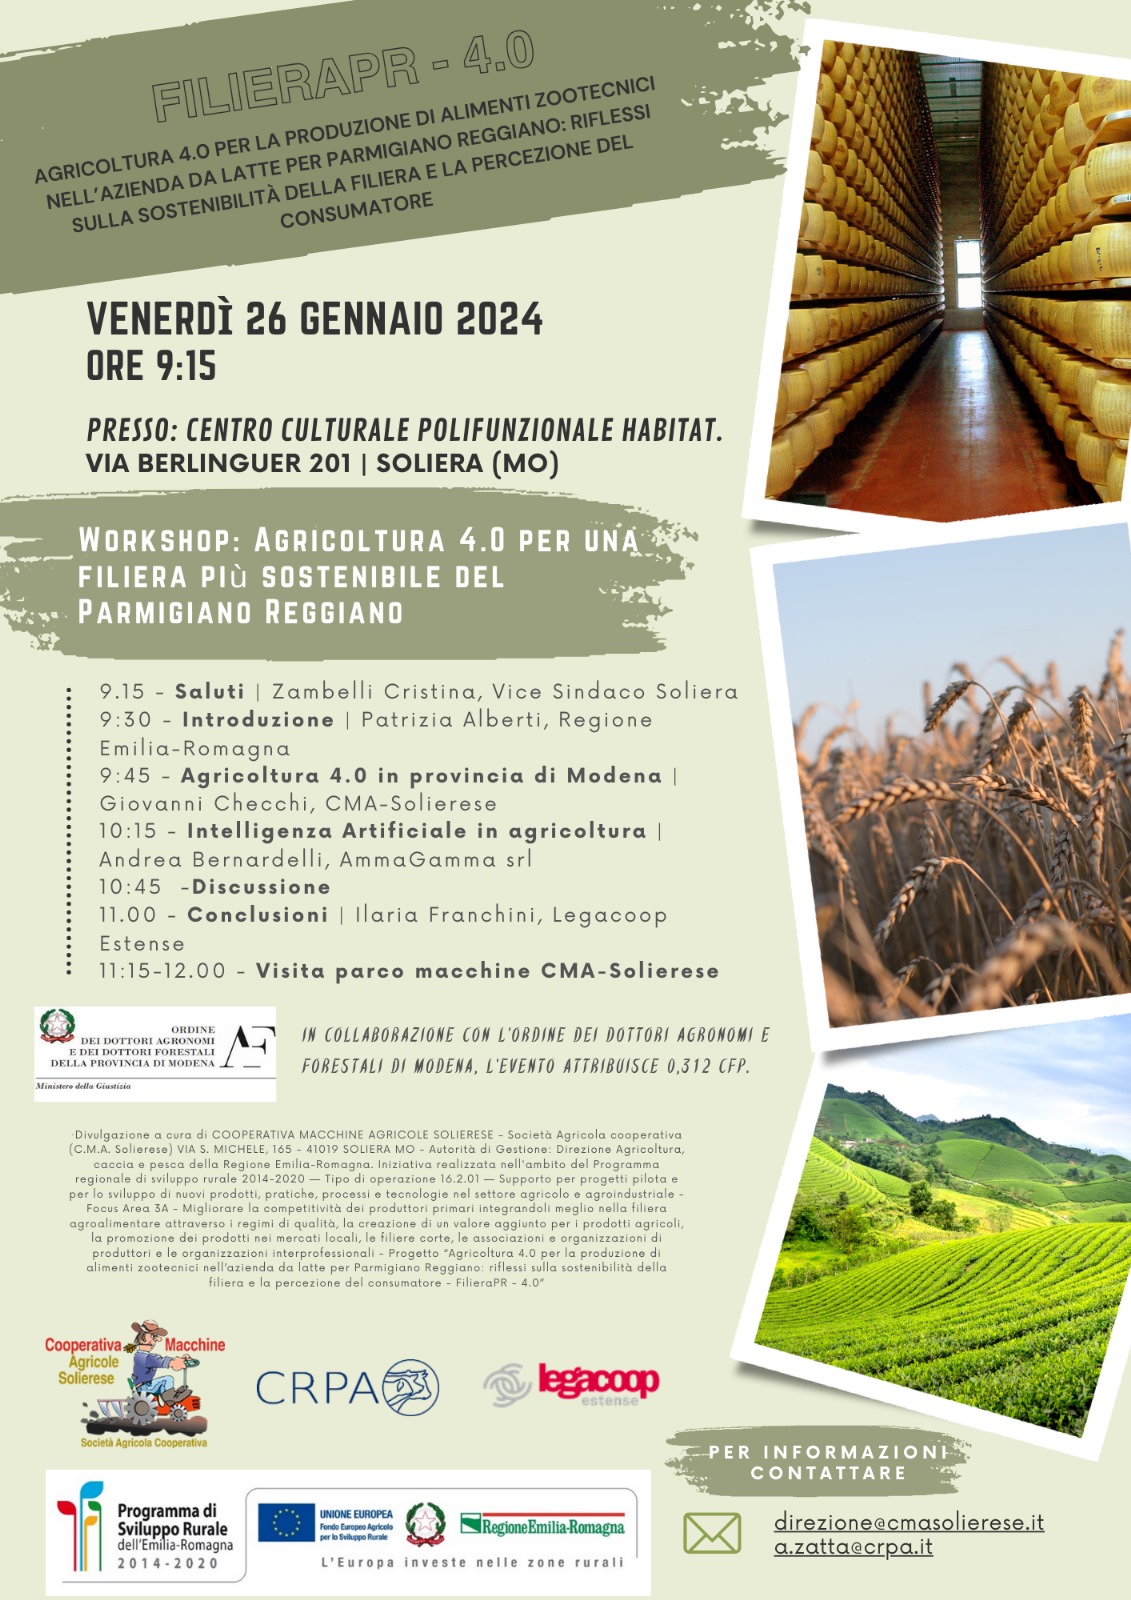 Agricoltura 4.0 per una filiera più sostenibile del Parmigiano Reggiano: workshop 26 gennaio